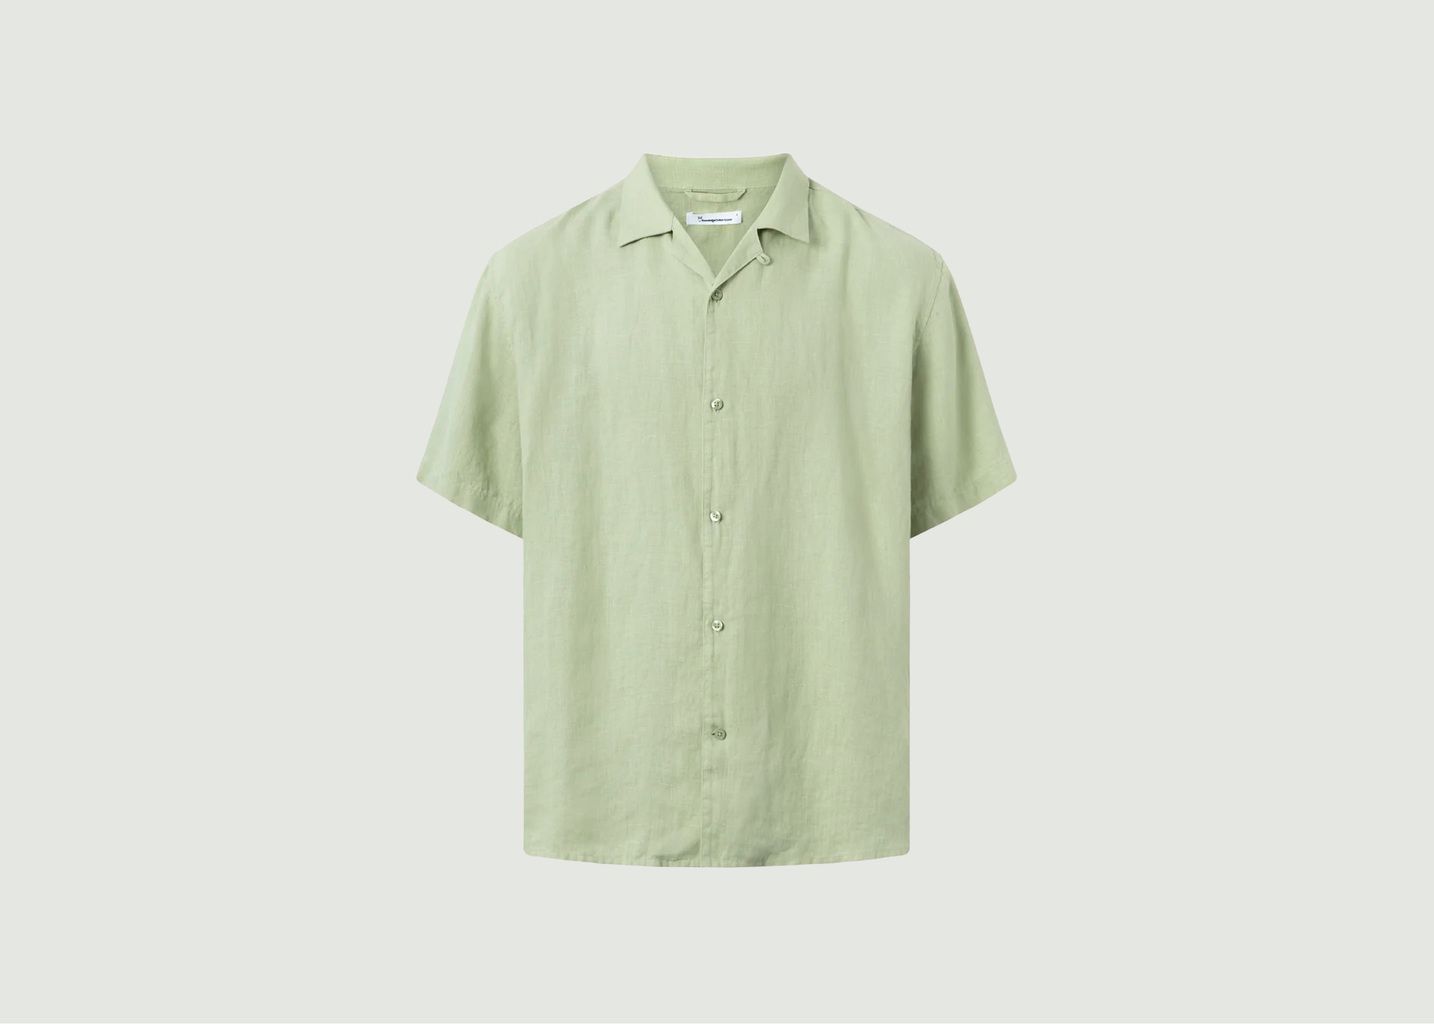 knowledge-cotton-apparel-organic-linen-blouse-boxy-cut